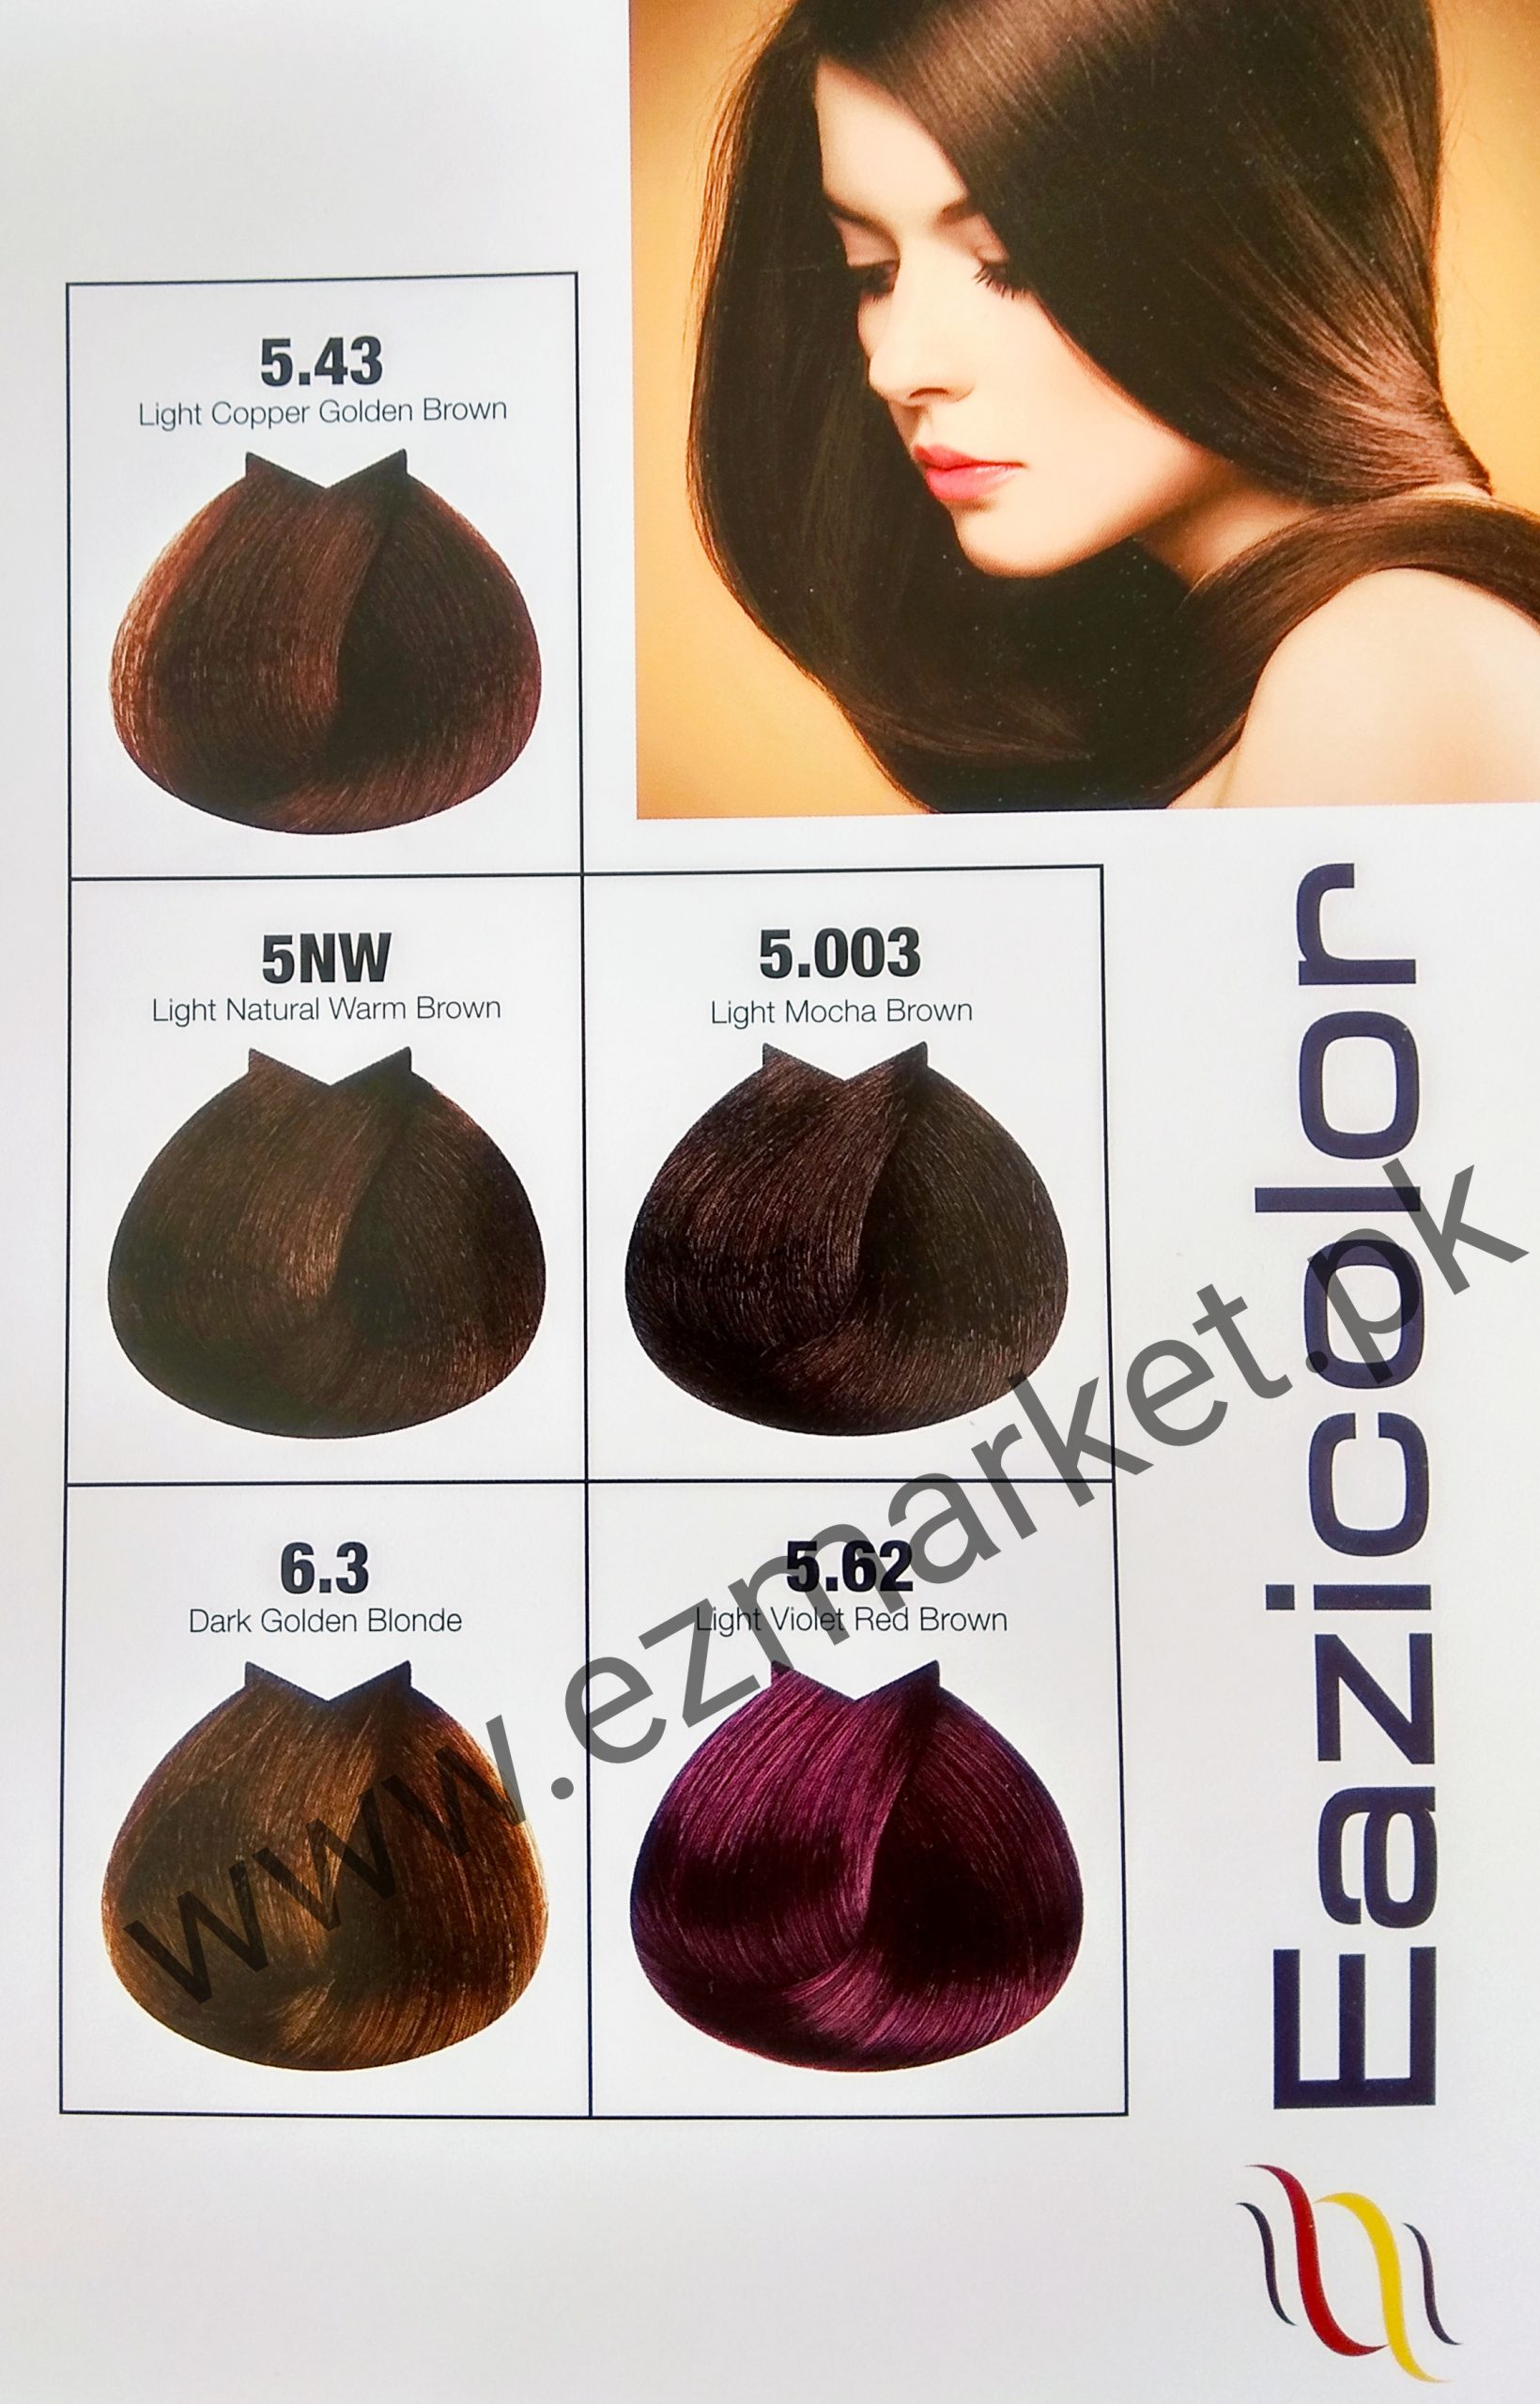 Eazicolor Premium Hair Color Kit For Women Light Golden Brown  | ezMarket